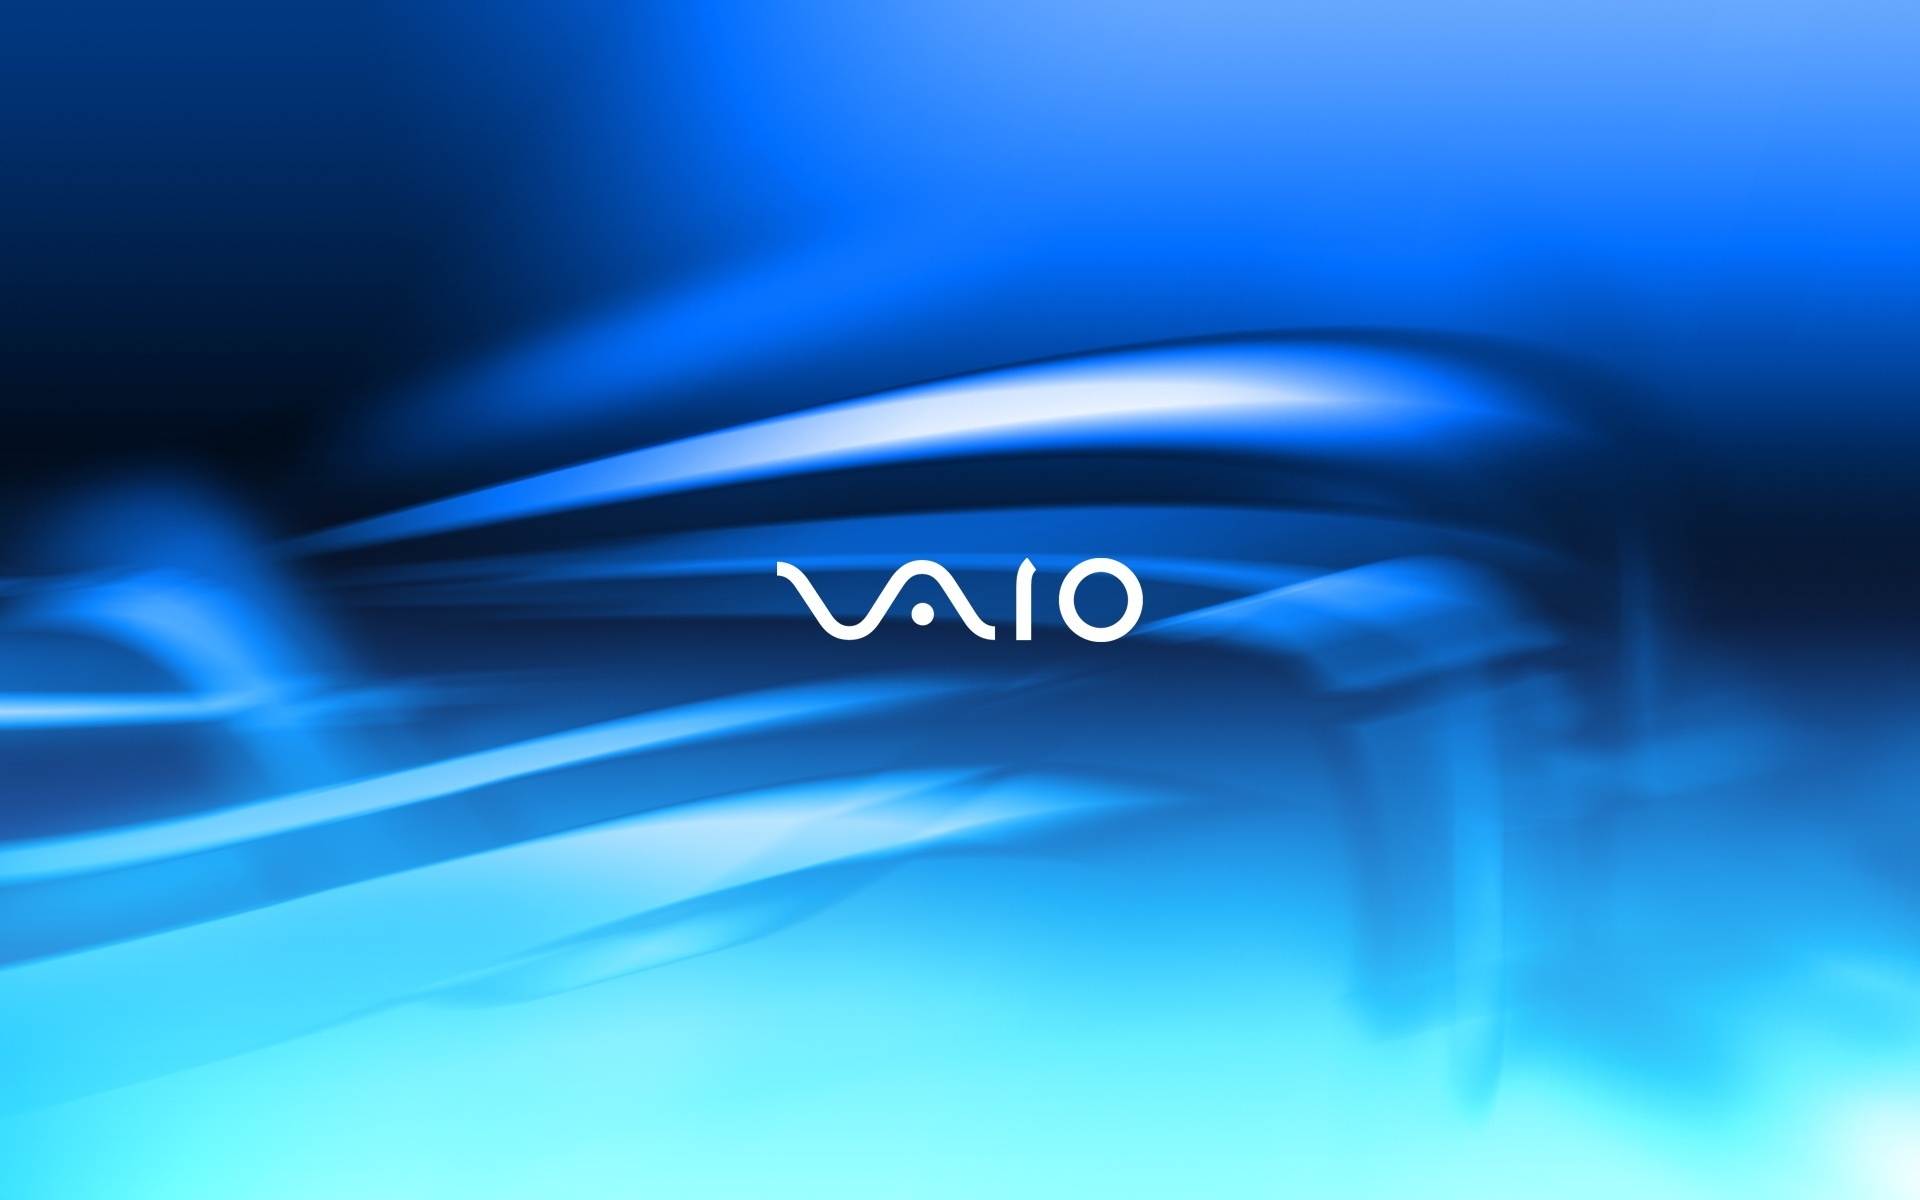 Vaio light blue for 1920 x 1200 widescreen resolution